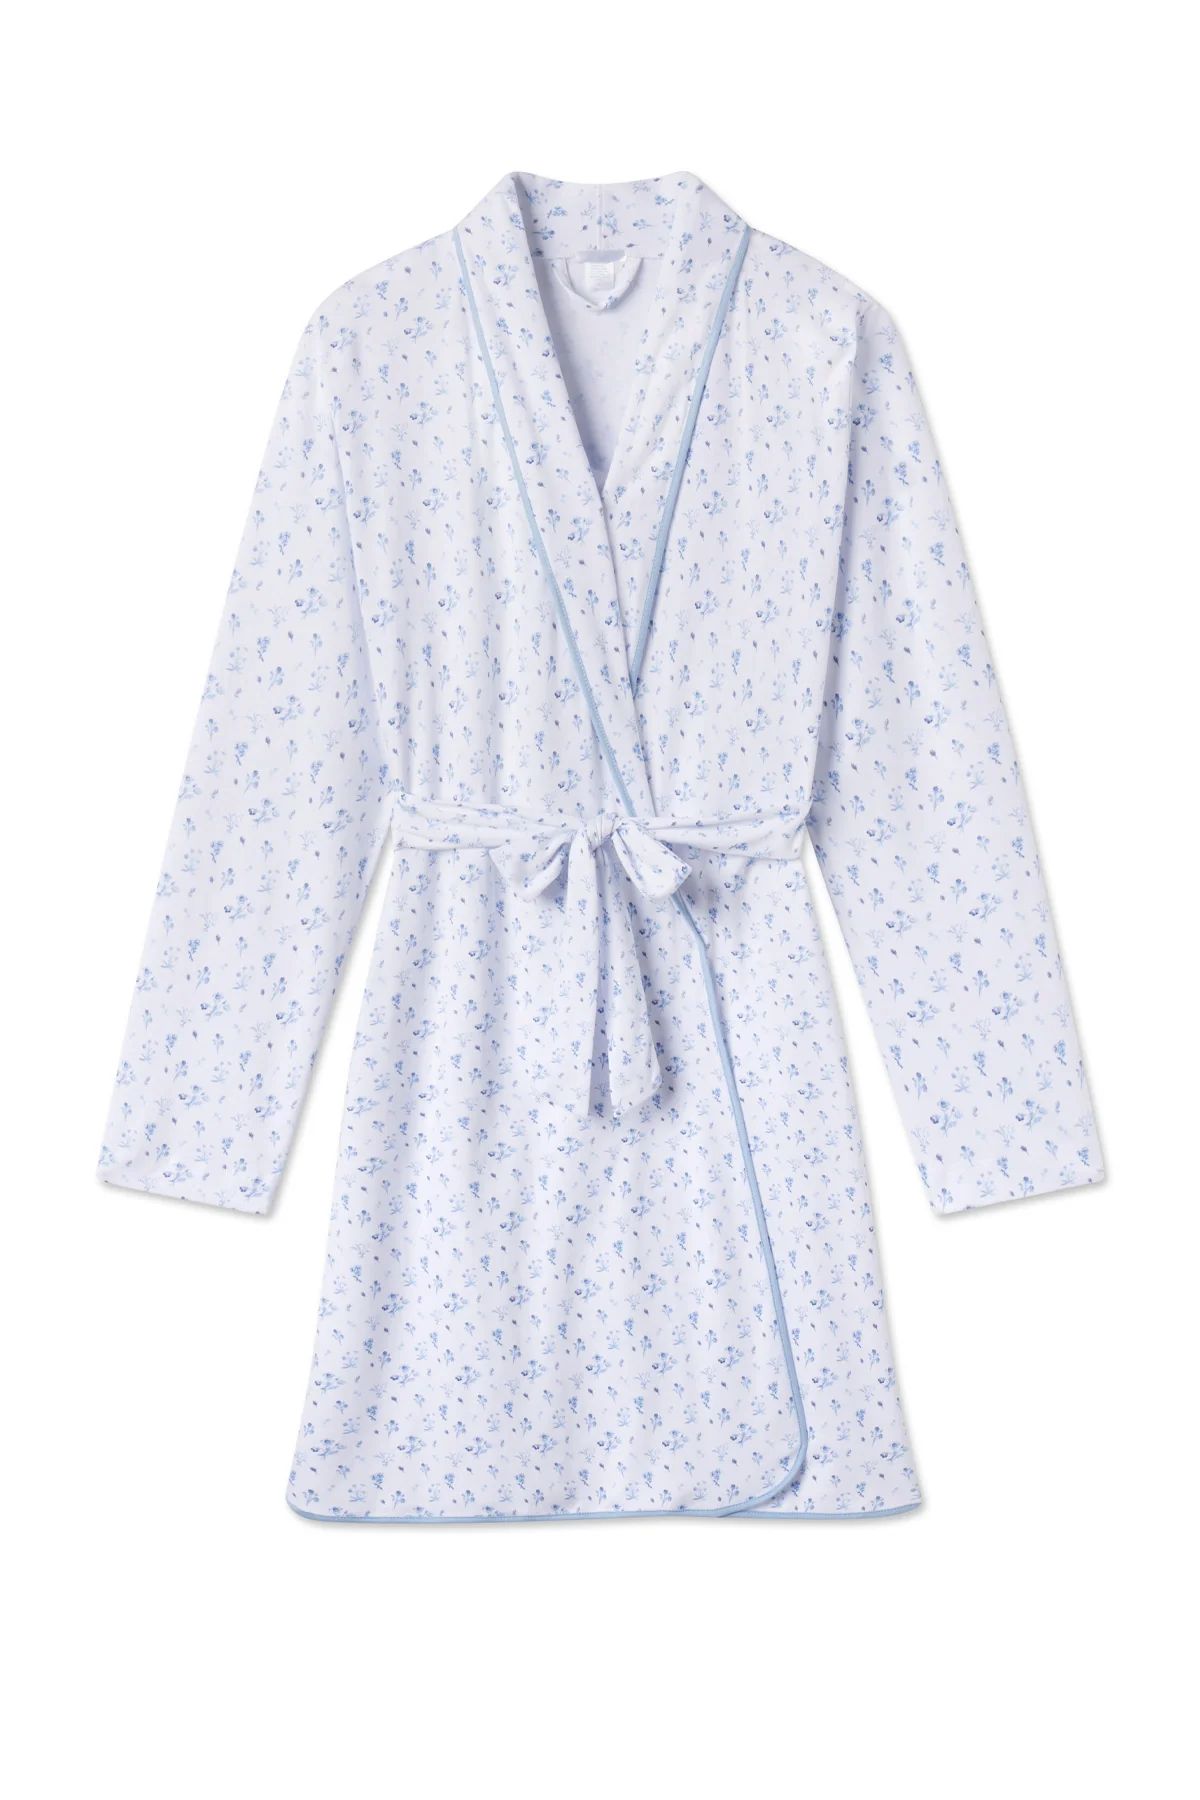 Pima Robe in French Blue Floral | Lake Pajamas